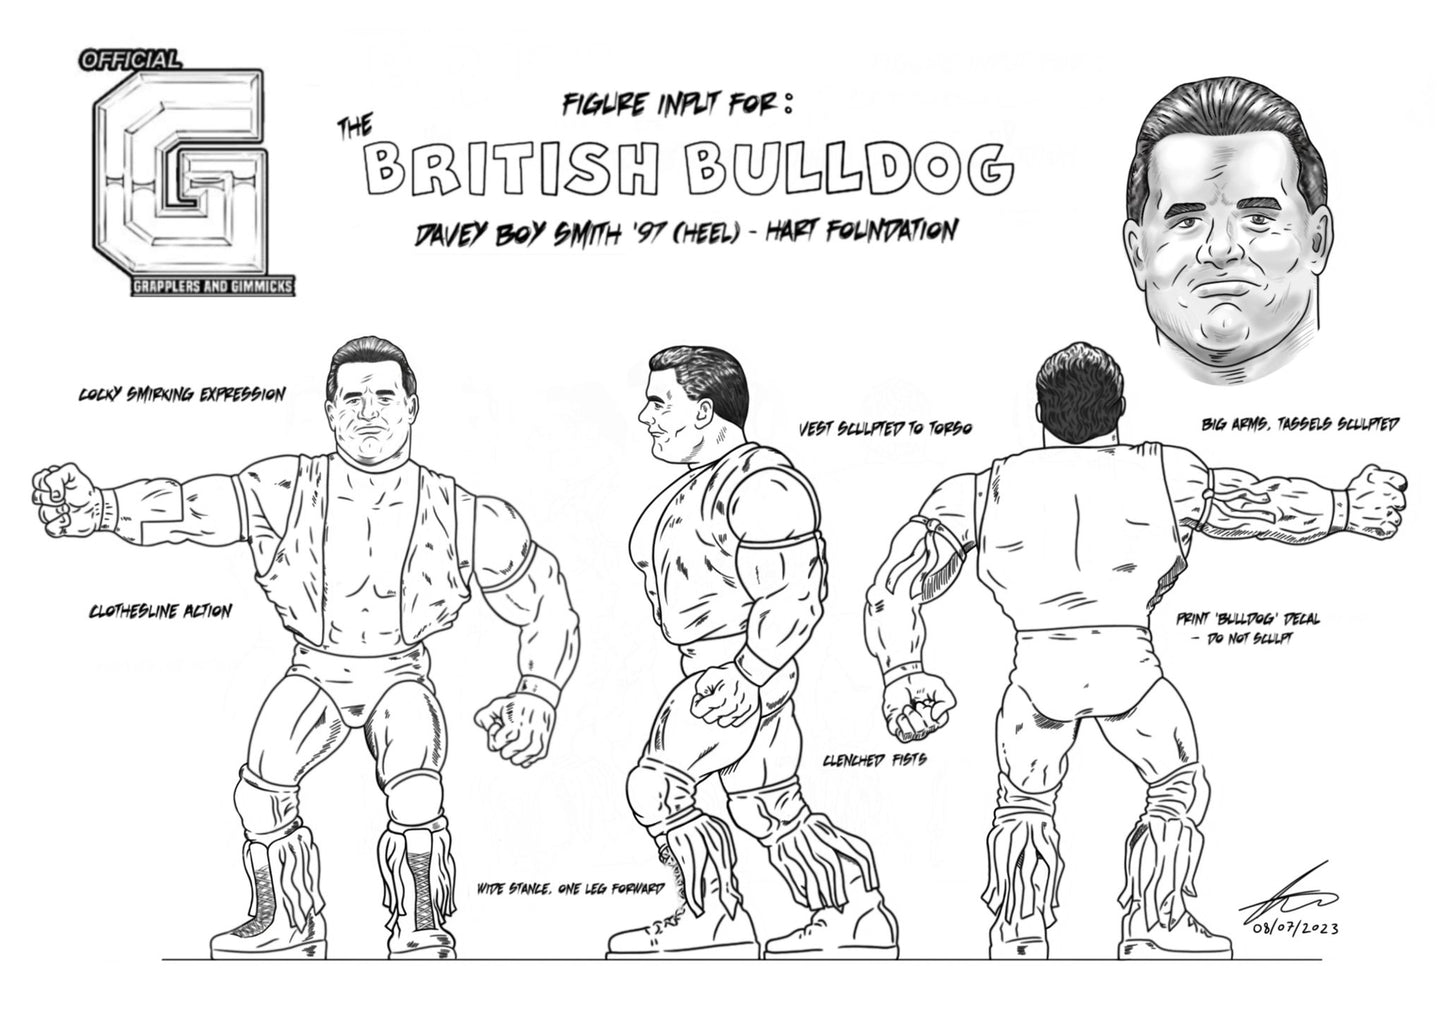 2024 Hasttel Toy Grapplers & Gimmicks British Bulldog '97